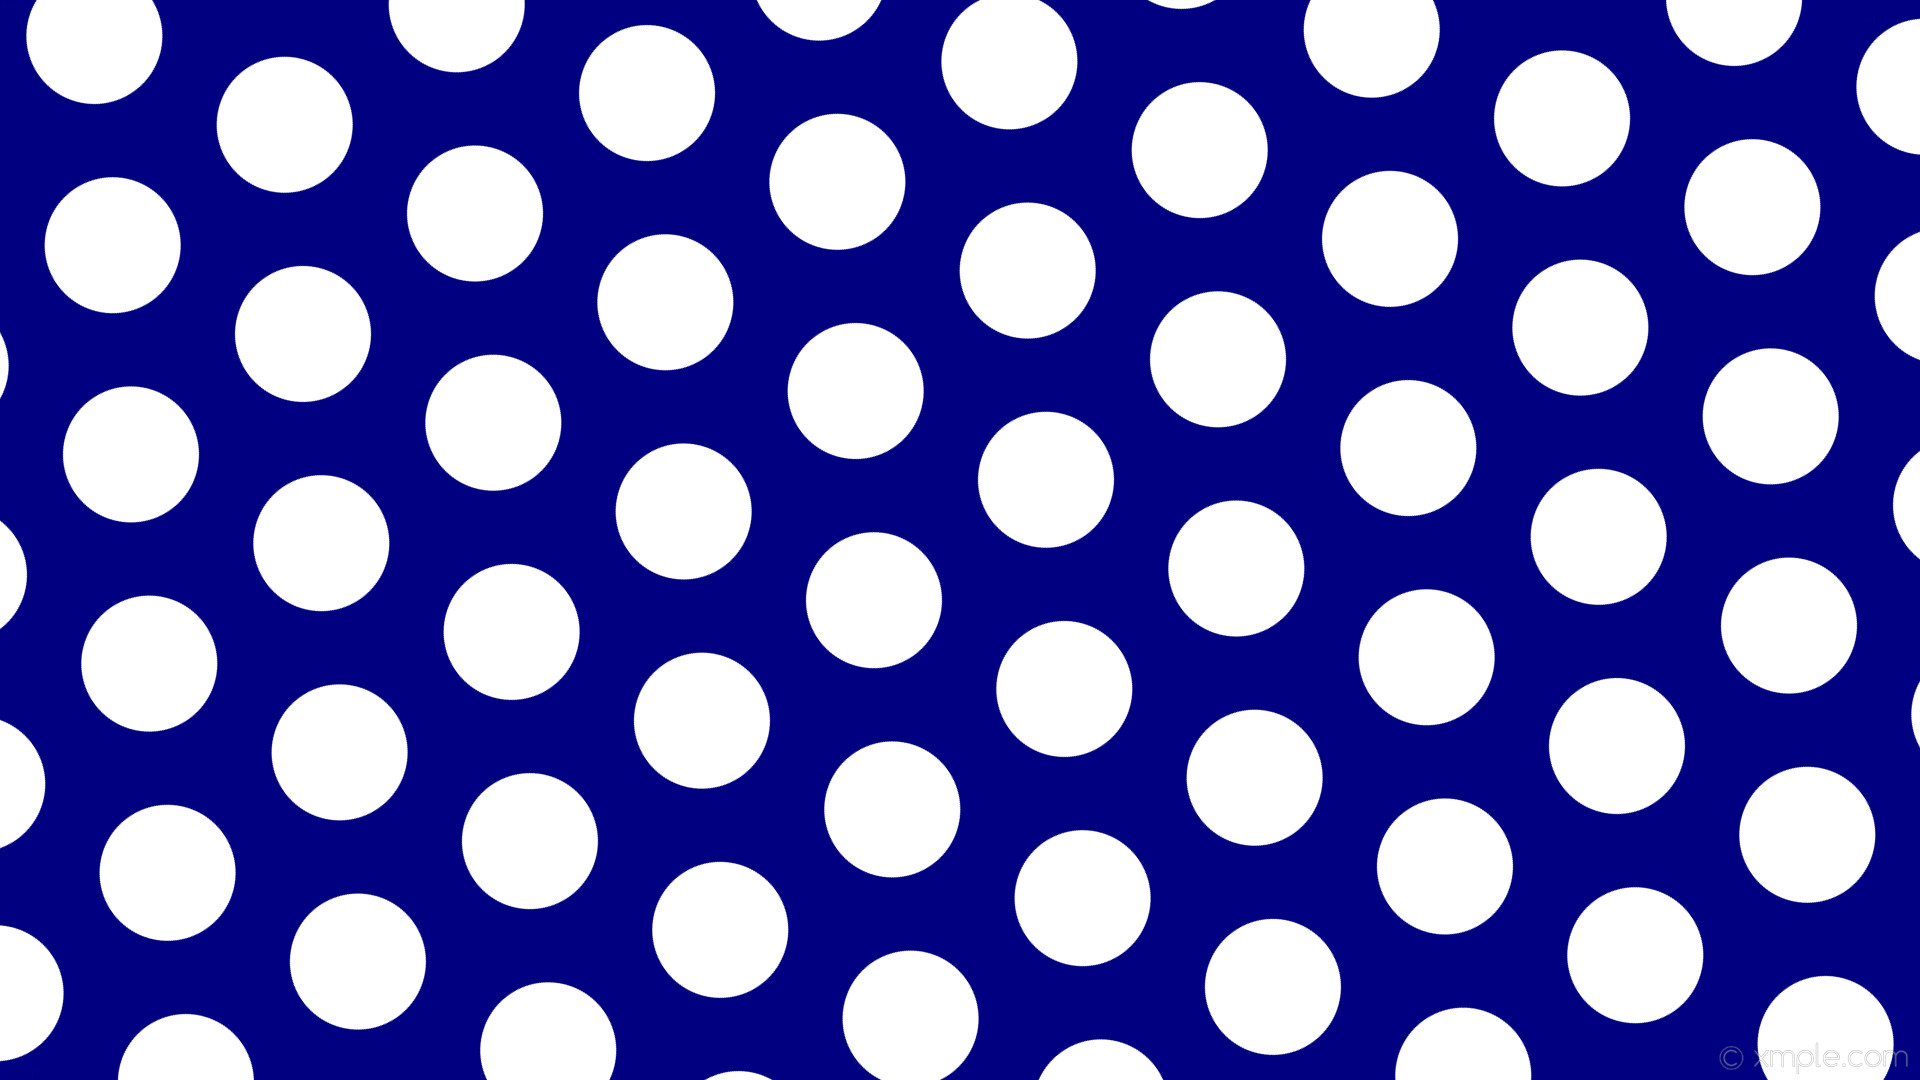 Wallpaper hexagon blue white polka dots navy #ffffff diagonal 35 136px 210px